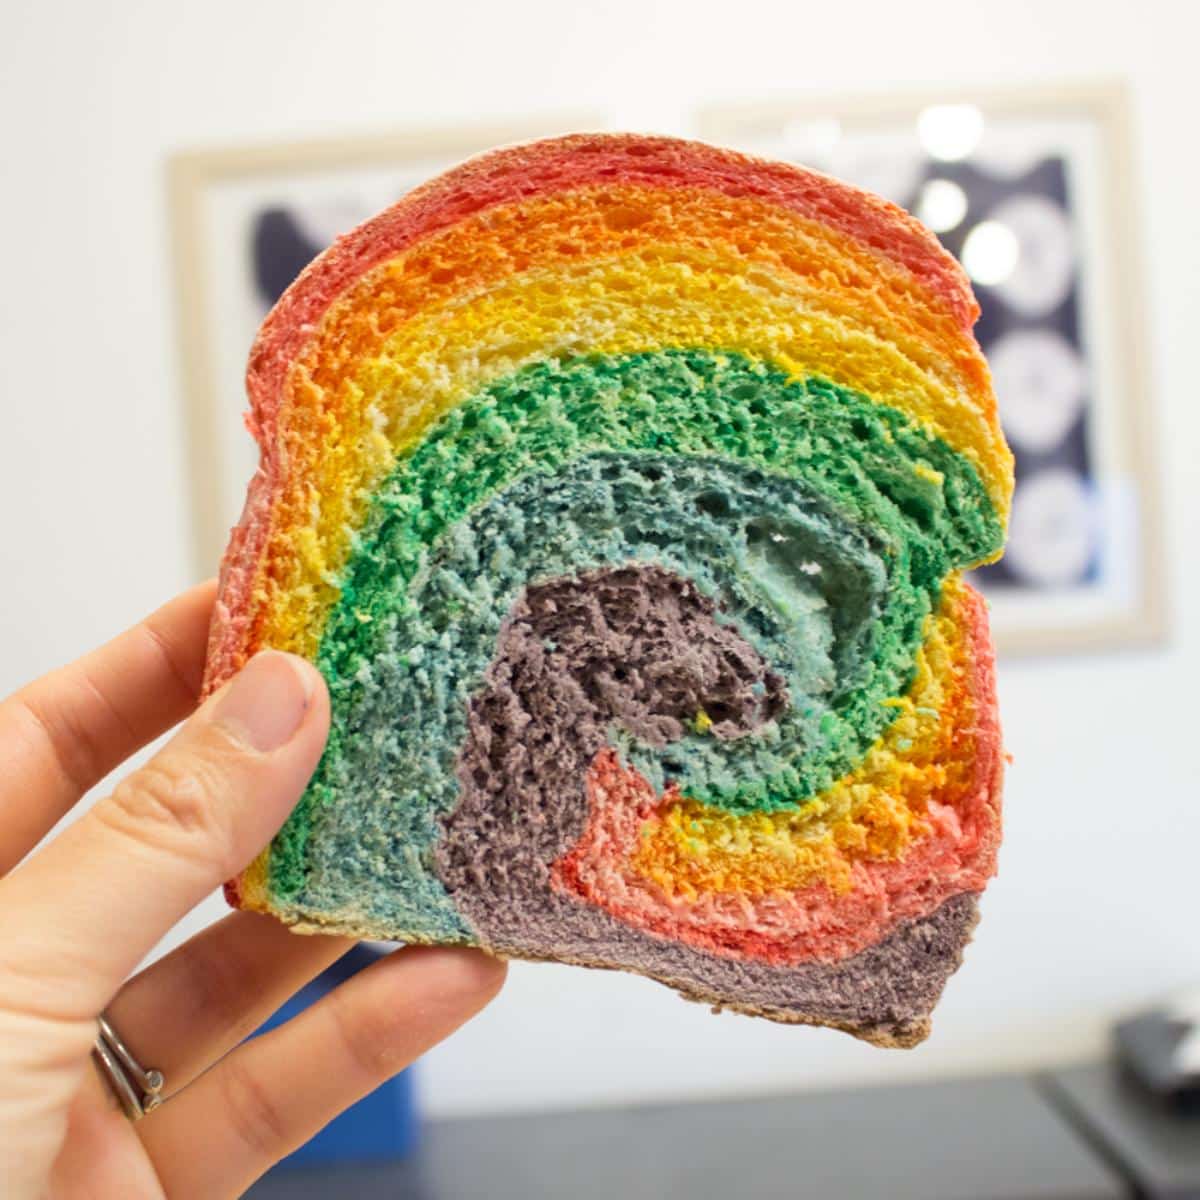 A Slice Of Rainbow Bread